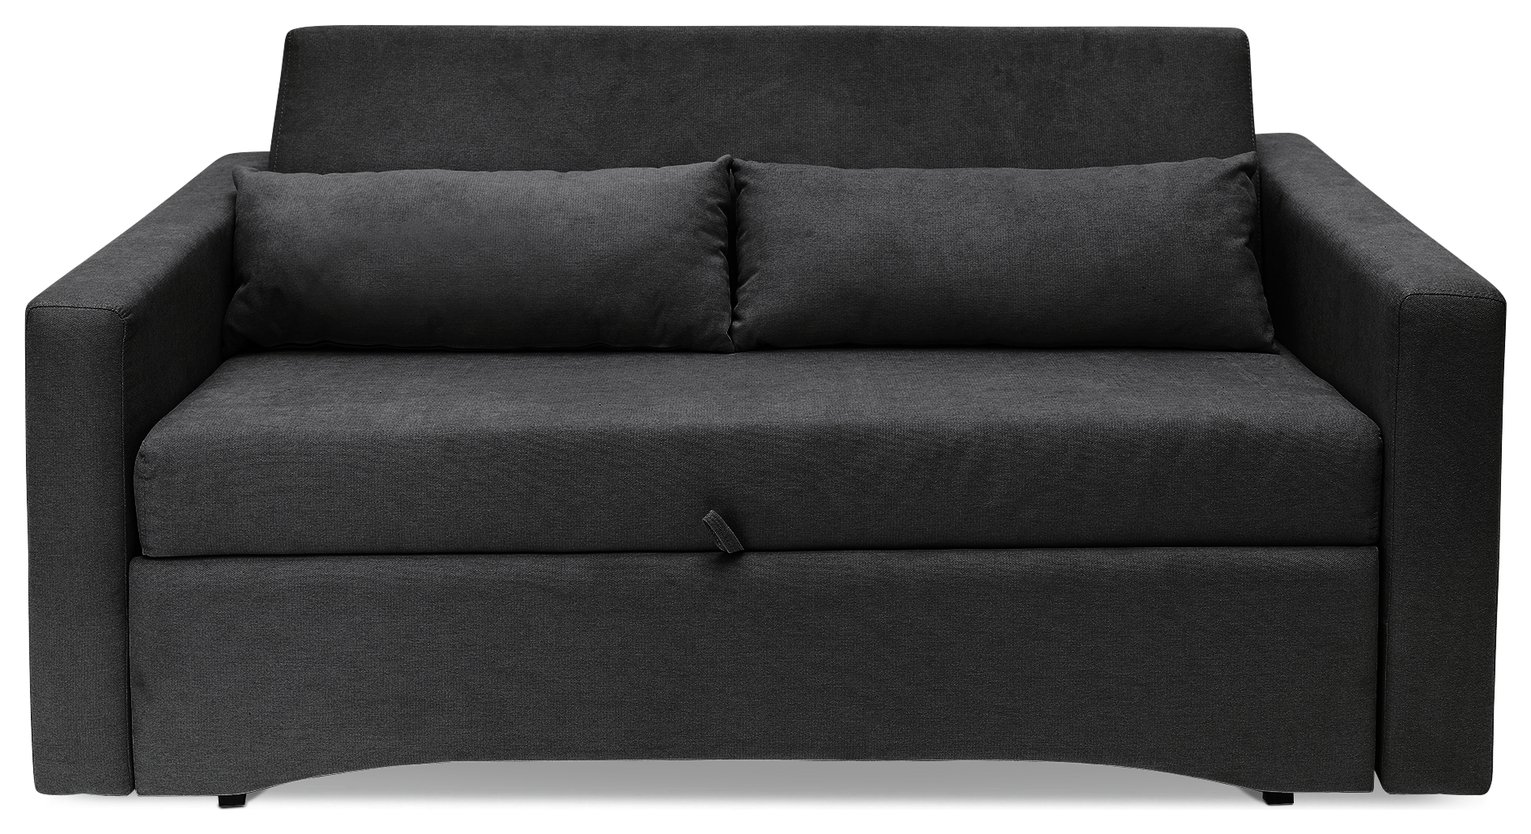 Habitat Reagan 2 Seater Fabric Sofa Bed - Charcoal